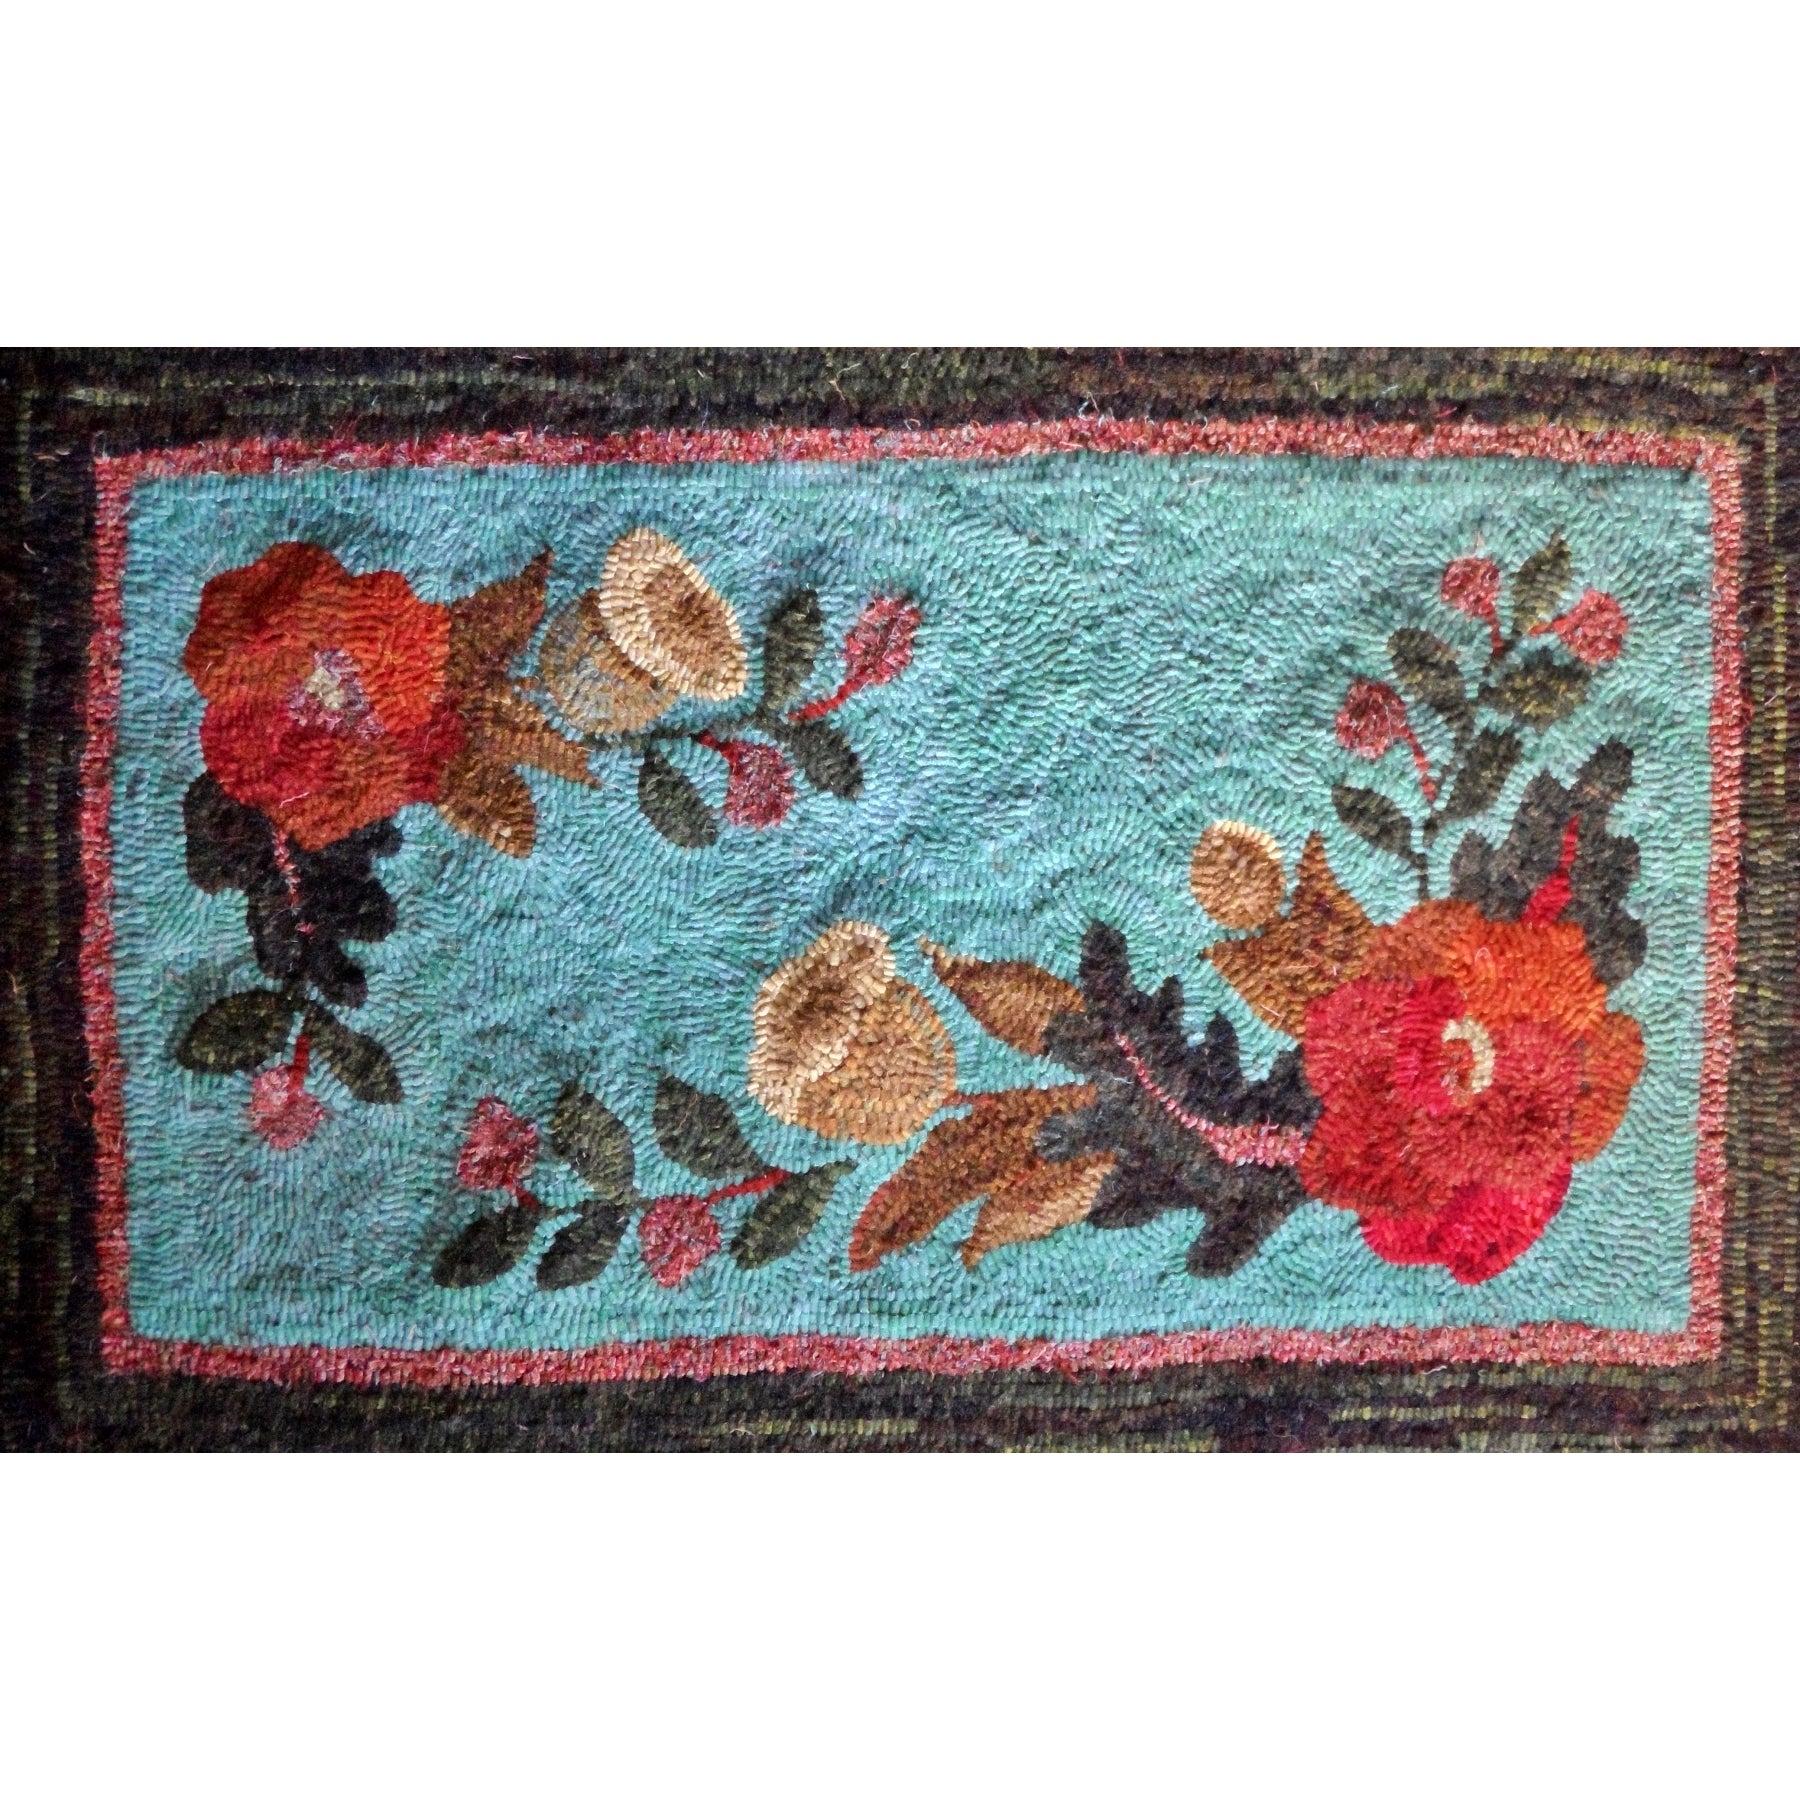 Vintage, rug hooked by Janet Williams